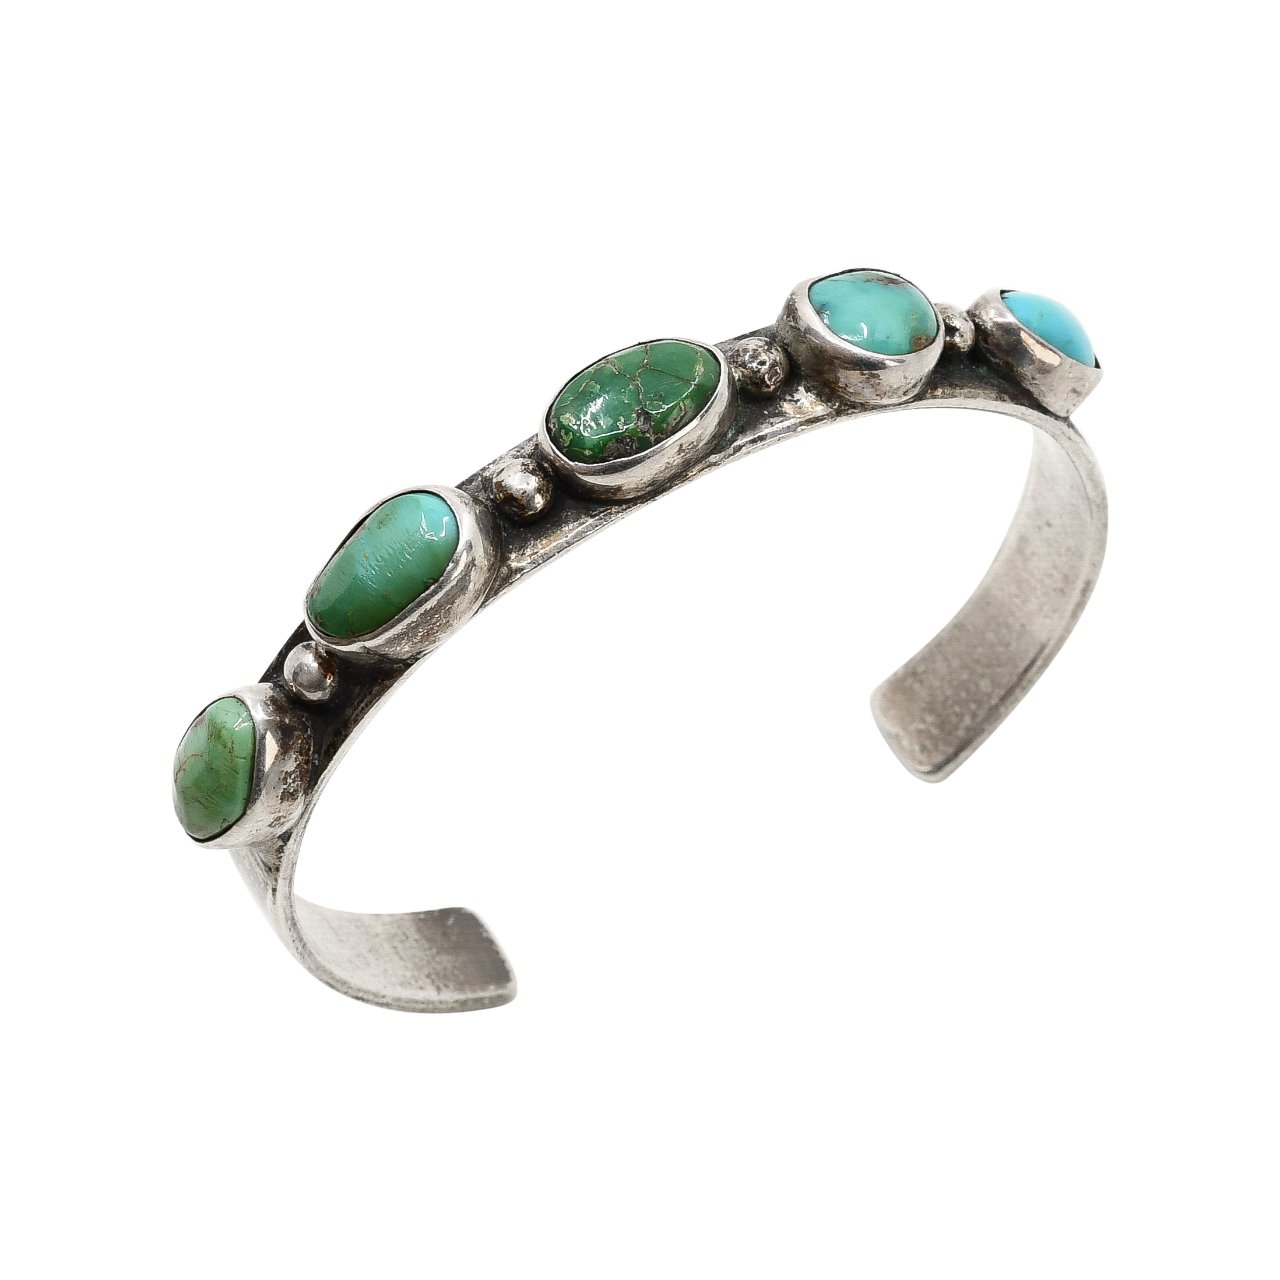 Vintage Silver Row Bracelet With Natural Turquoise Stones - Turquoise & Tufa